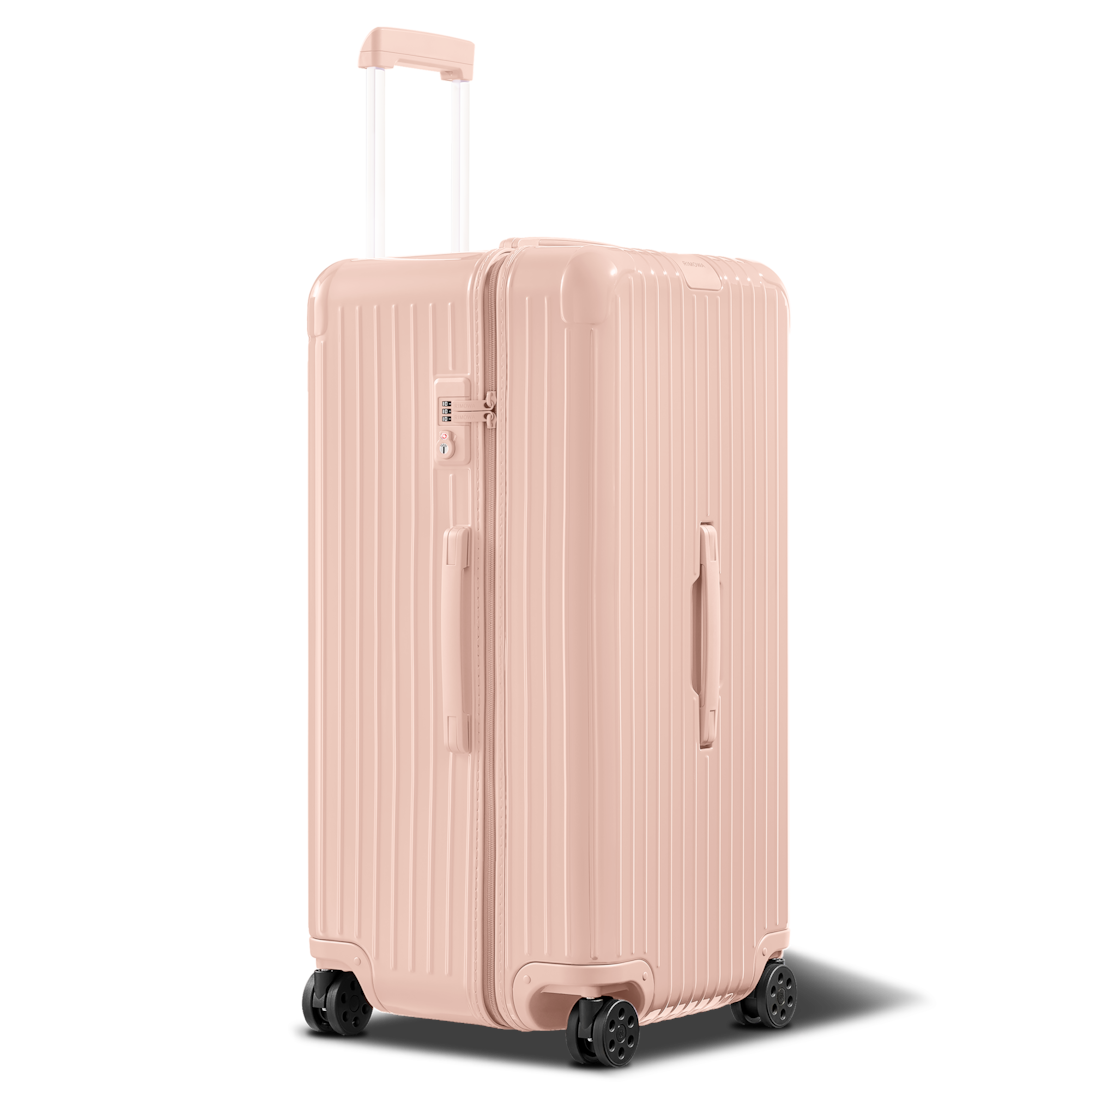 Essential Check-In L Lightweight Suitcase, Matte Blue